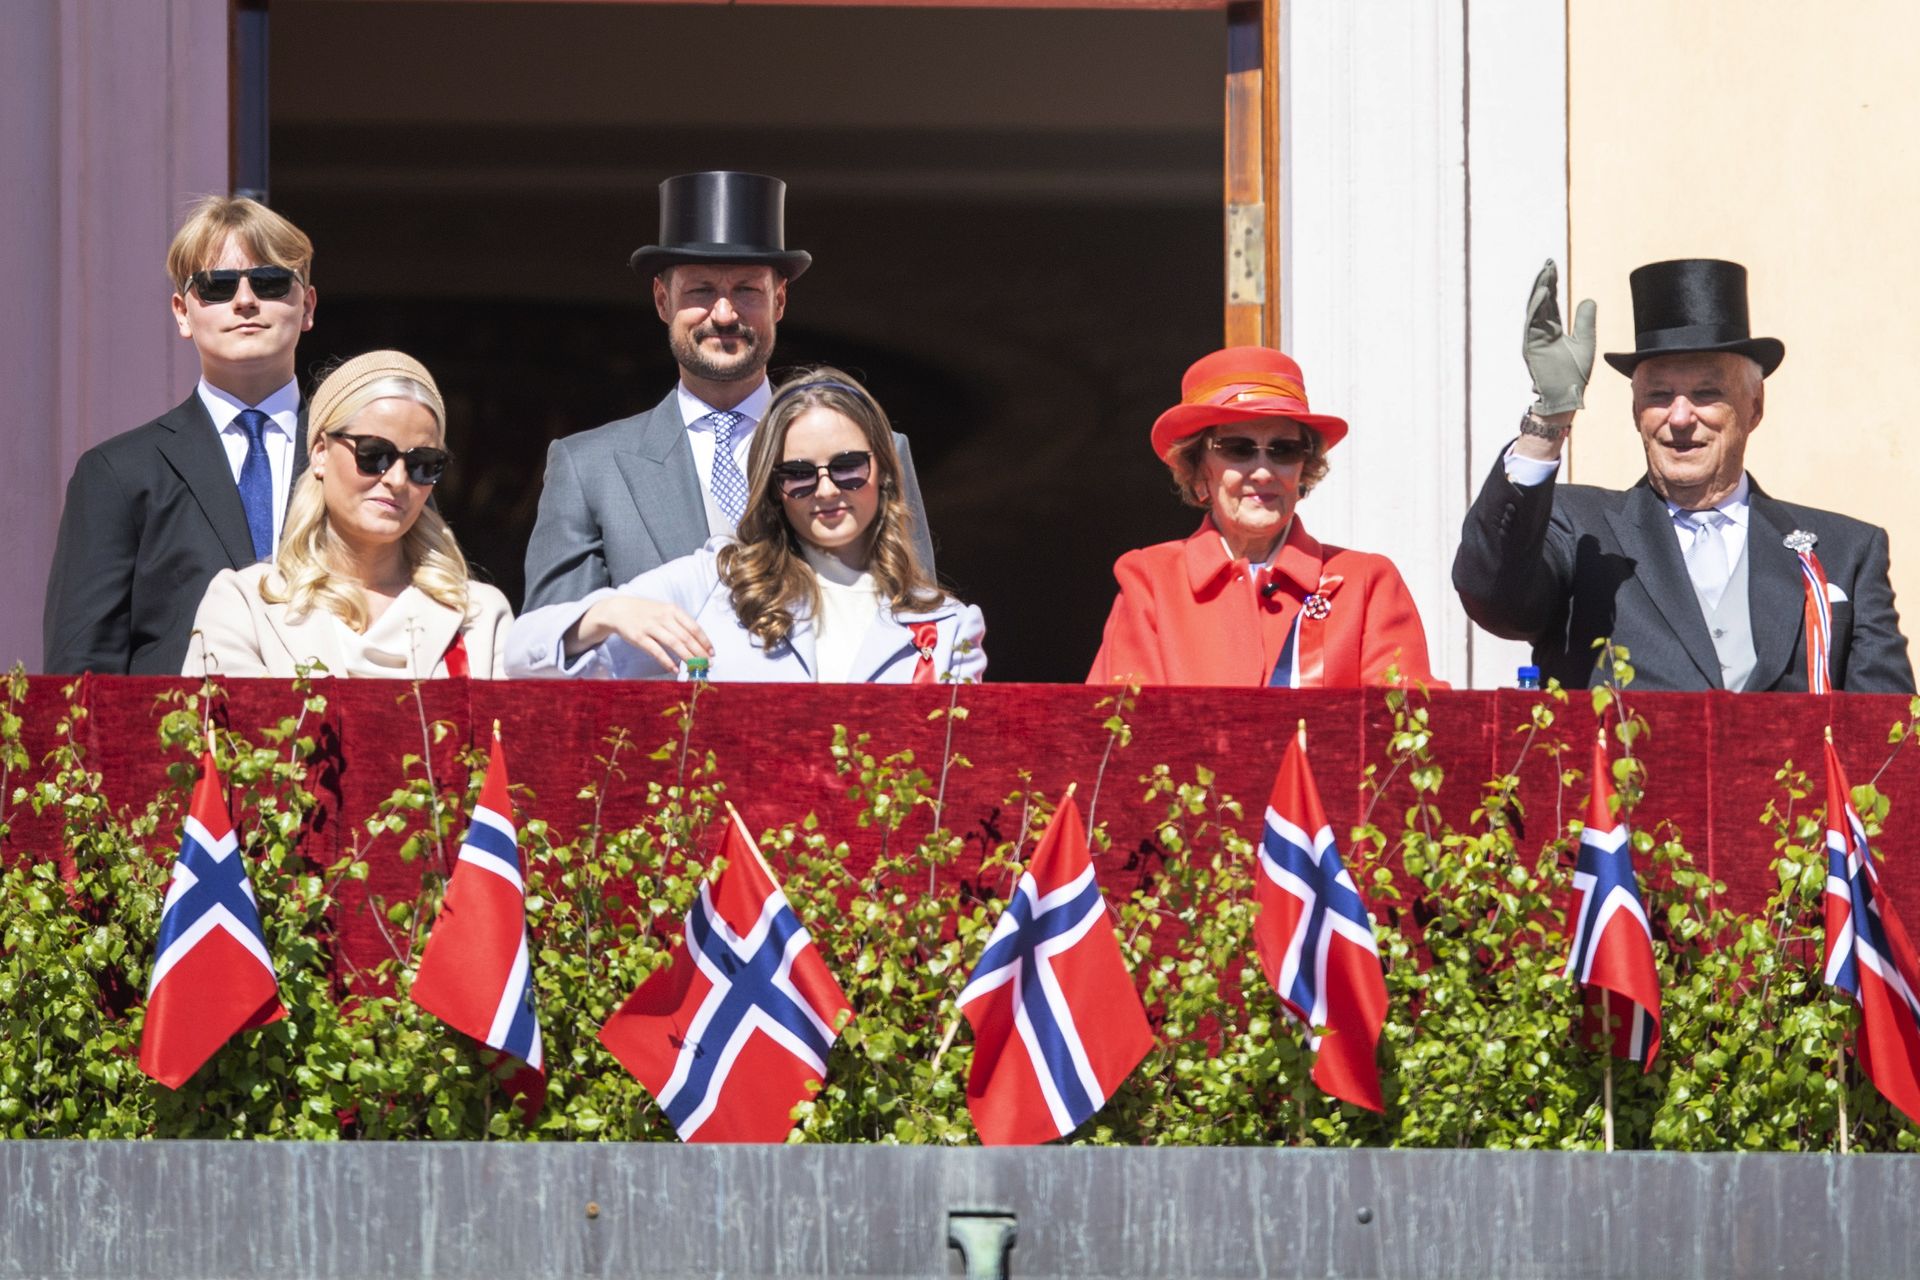 Noorse_koninklijke_familie_balkonscene_feestdag